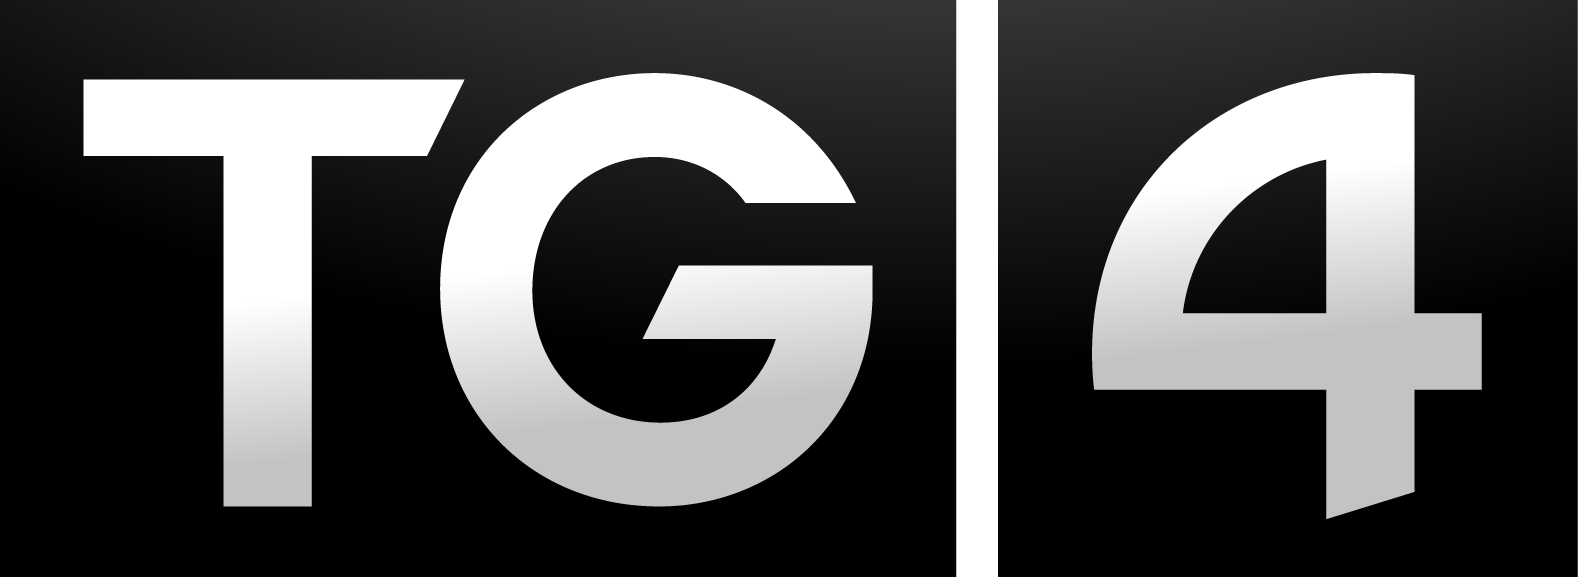 TG4 logo (gradient) RGB.png